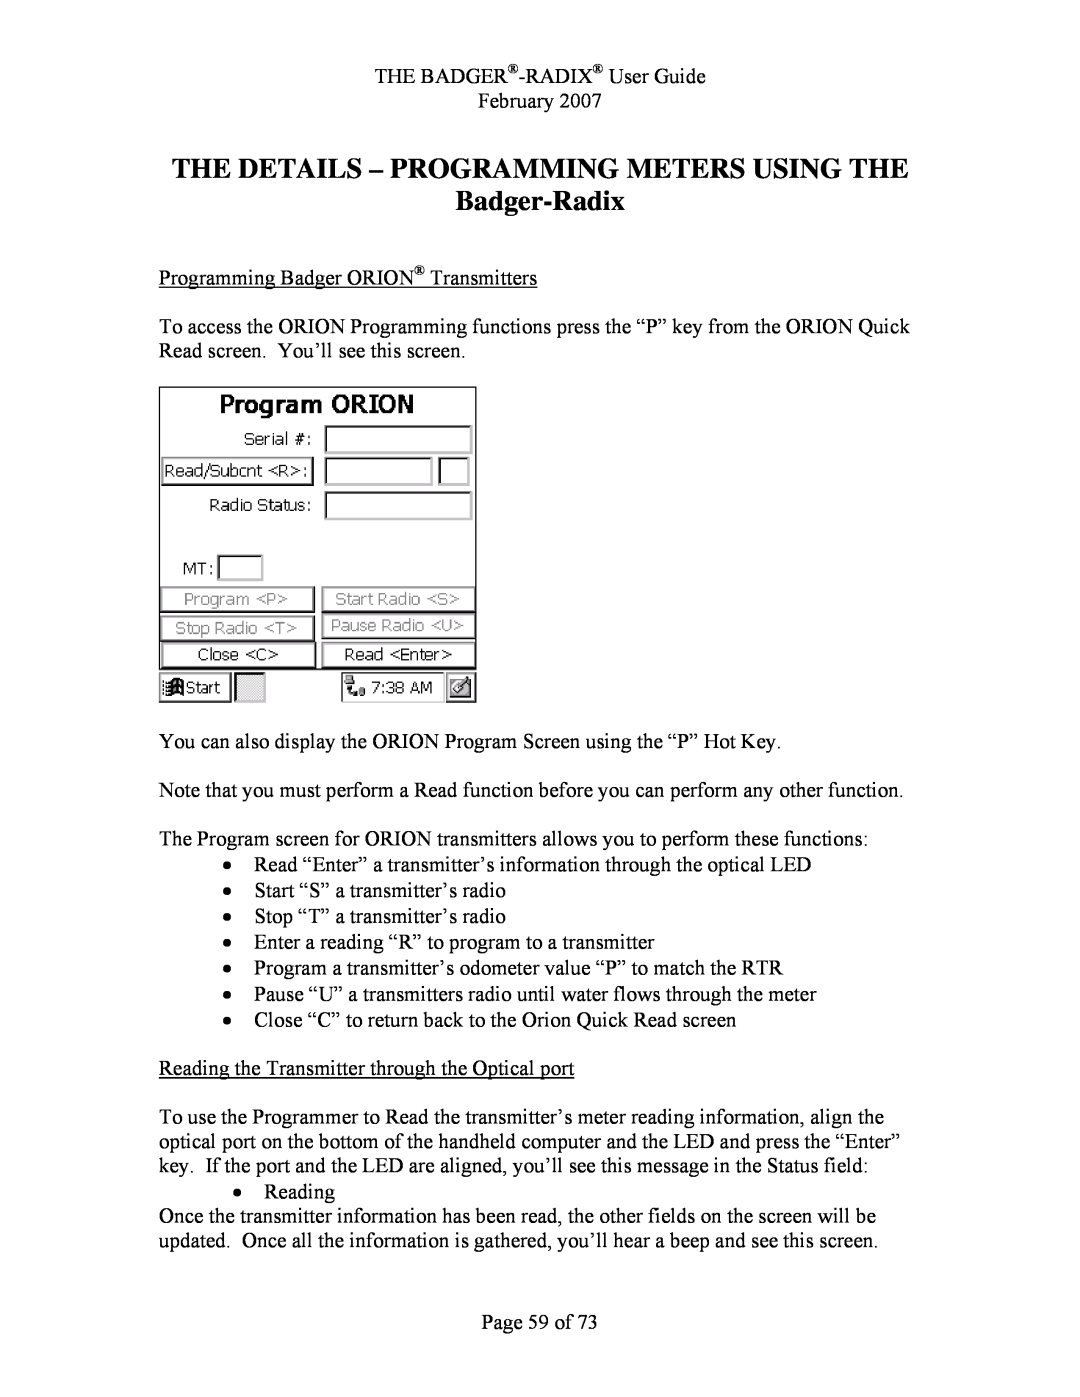 Badger Basket N64944-001, RAD-IOM-01 operation manual THE DETAILS - PROGRAMMING METERS USING THE Badger-Radix 